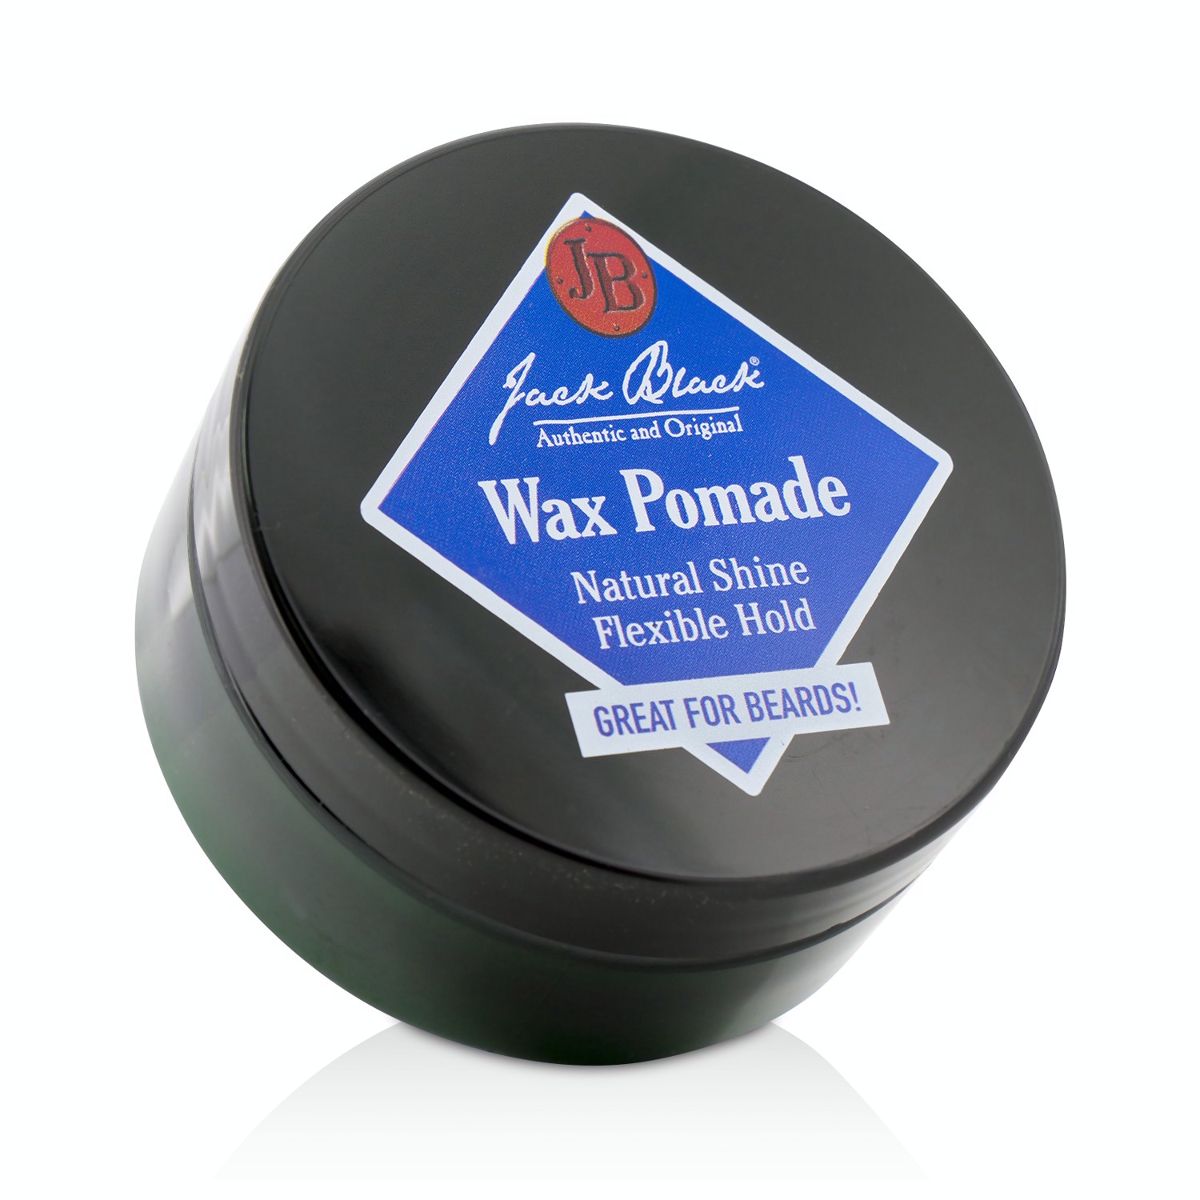 Wax Pomade (Natural Shine Flexible Hold) Jack Black Image